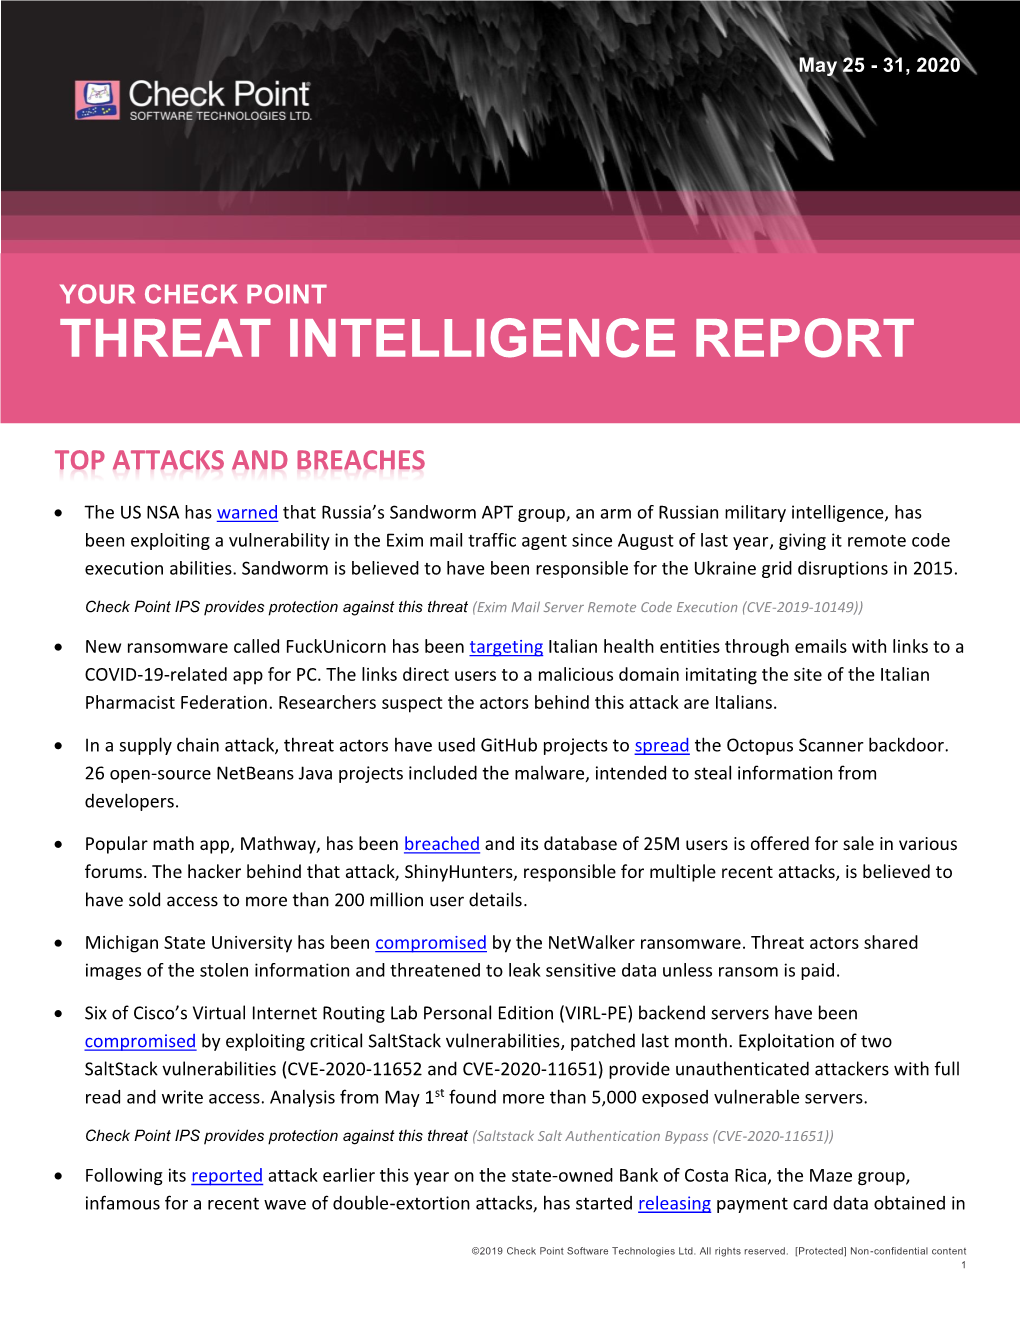 Check Point Threat Intelligence Bulletin